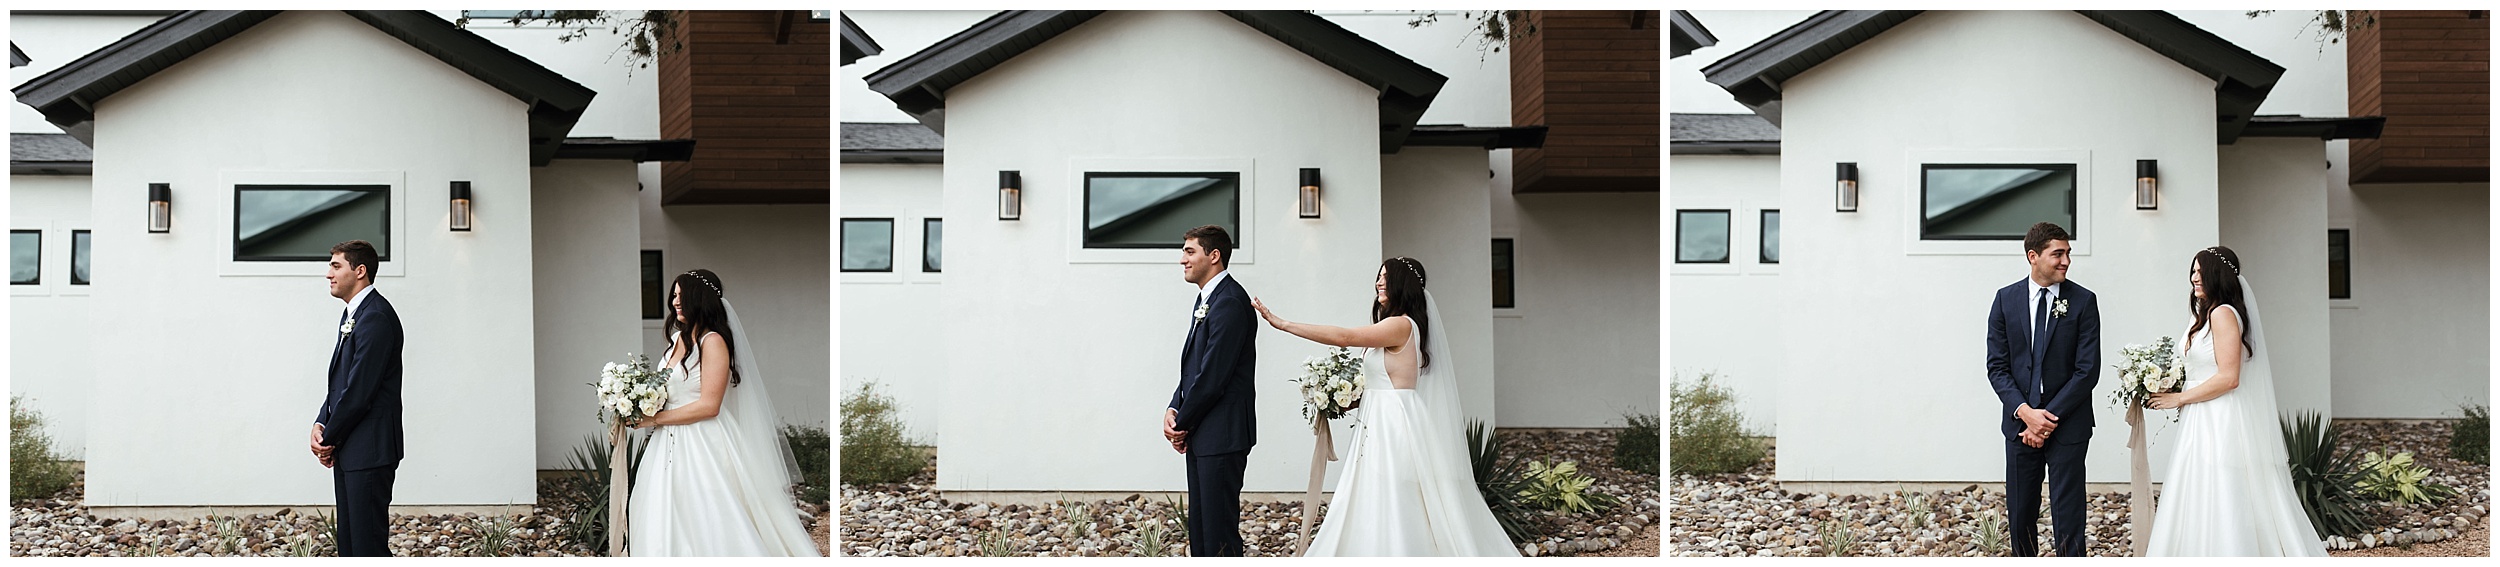  Hidden Falls Wedding | Kennedi+Marshall | Fort Worth Wedding Photographer | www.jordanmitchellphotography.com 